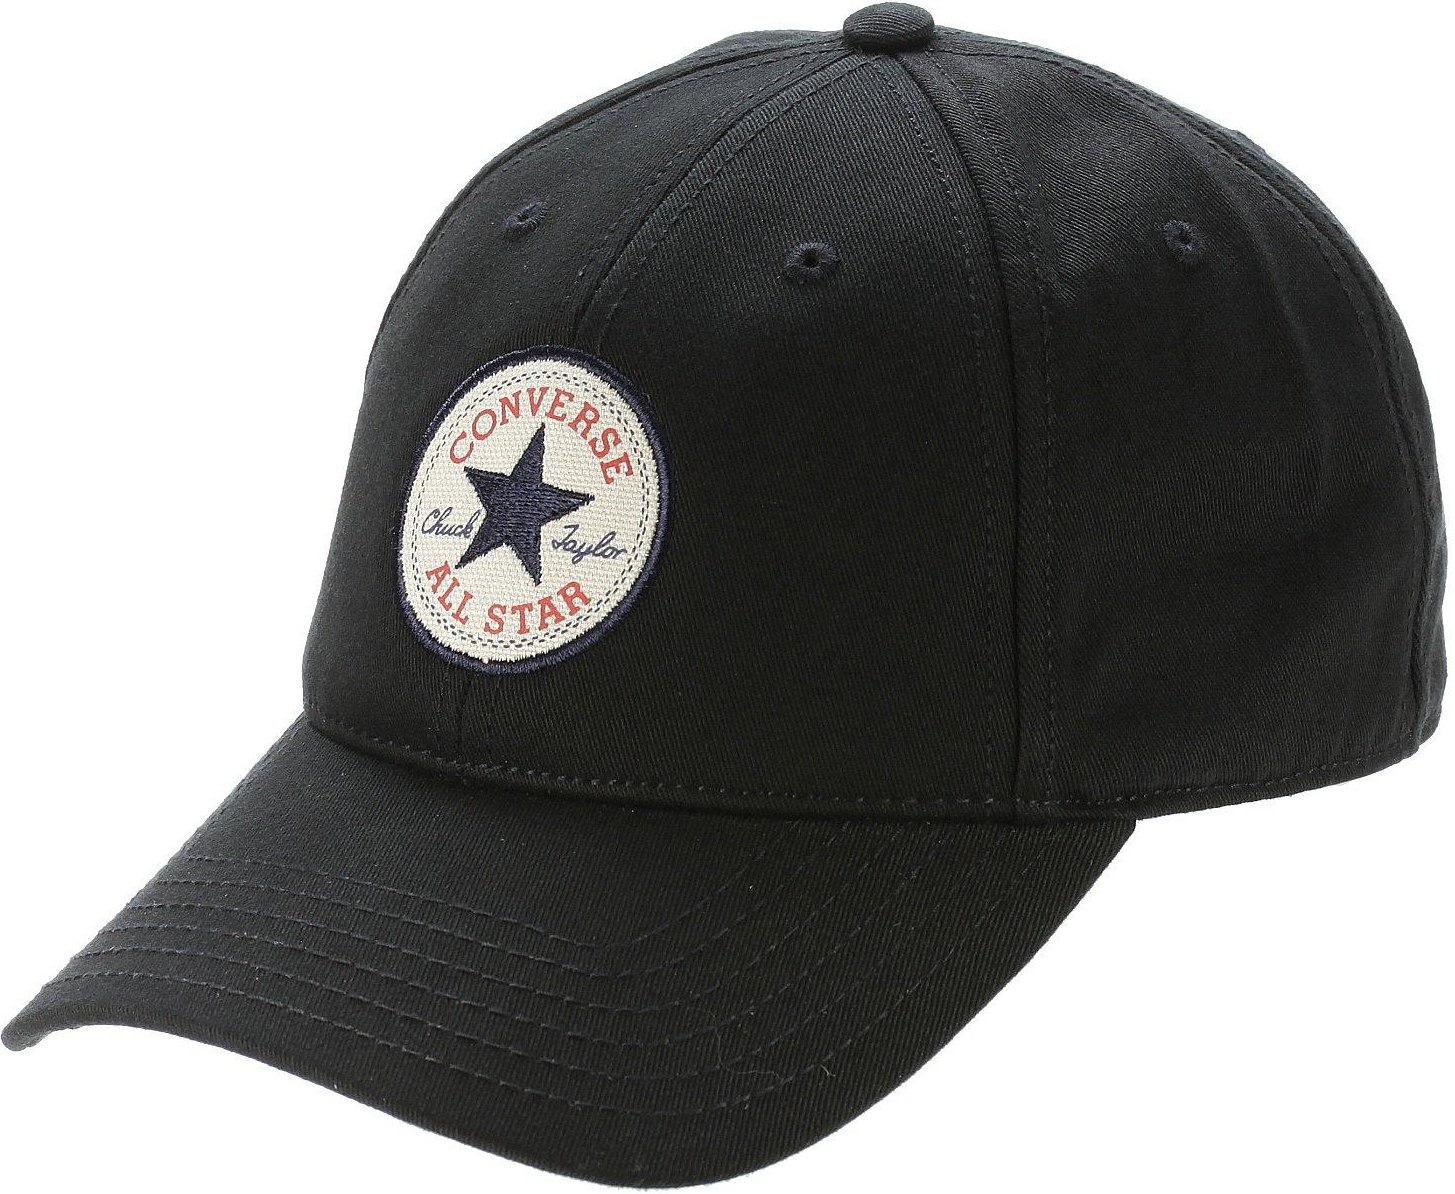 Men’s baseball cap